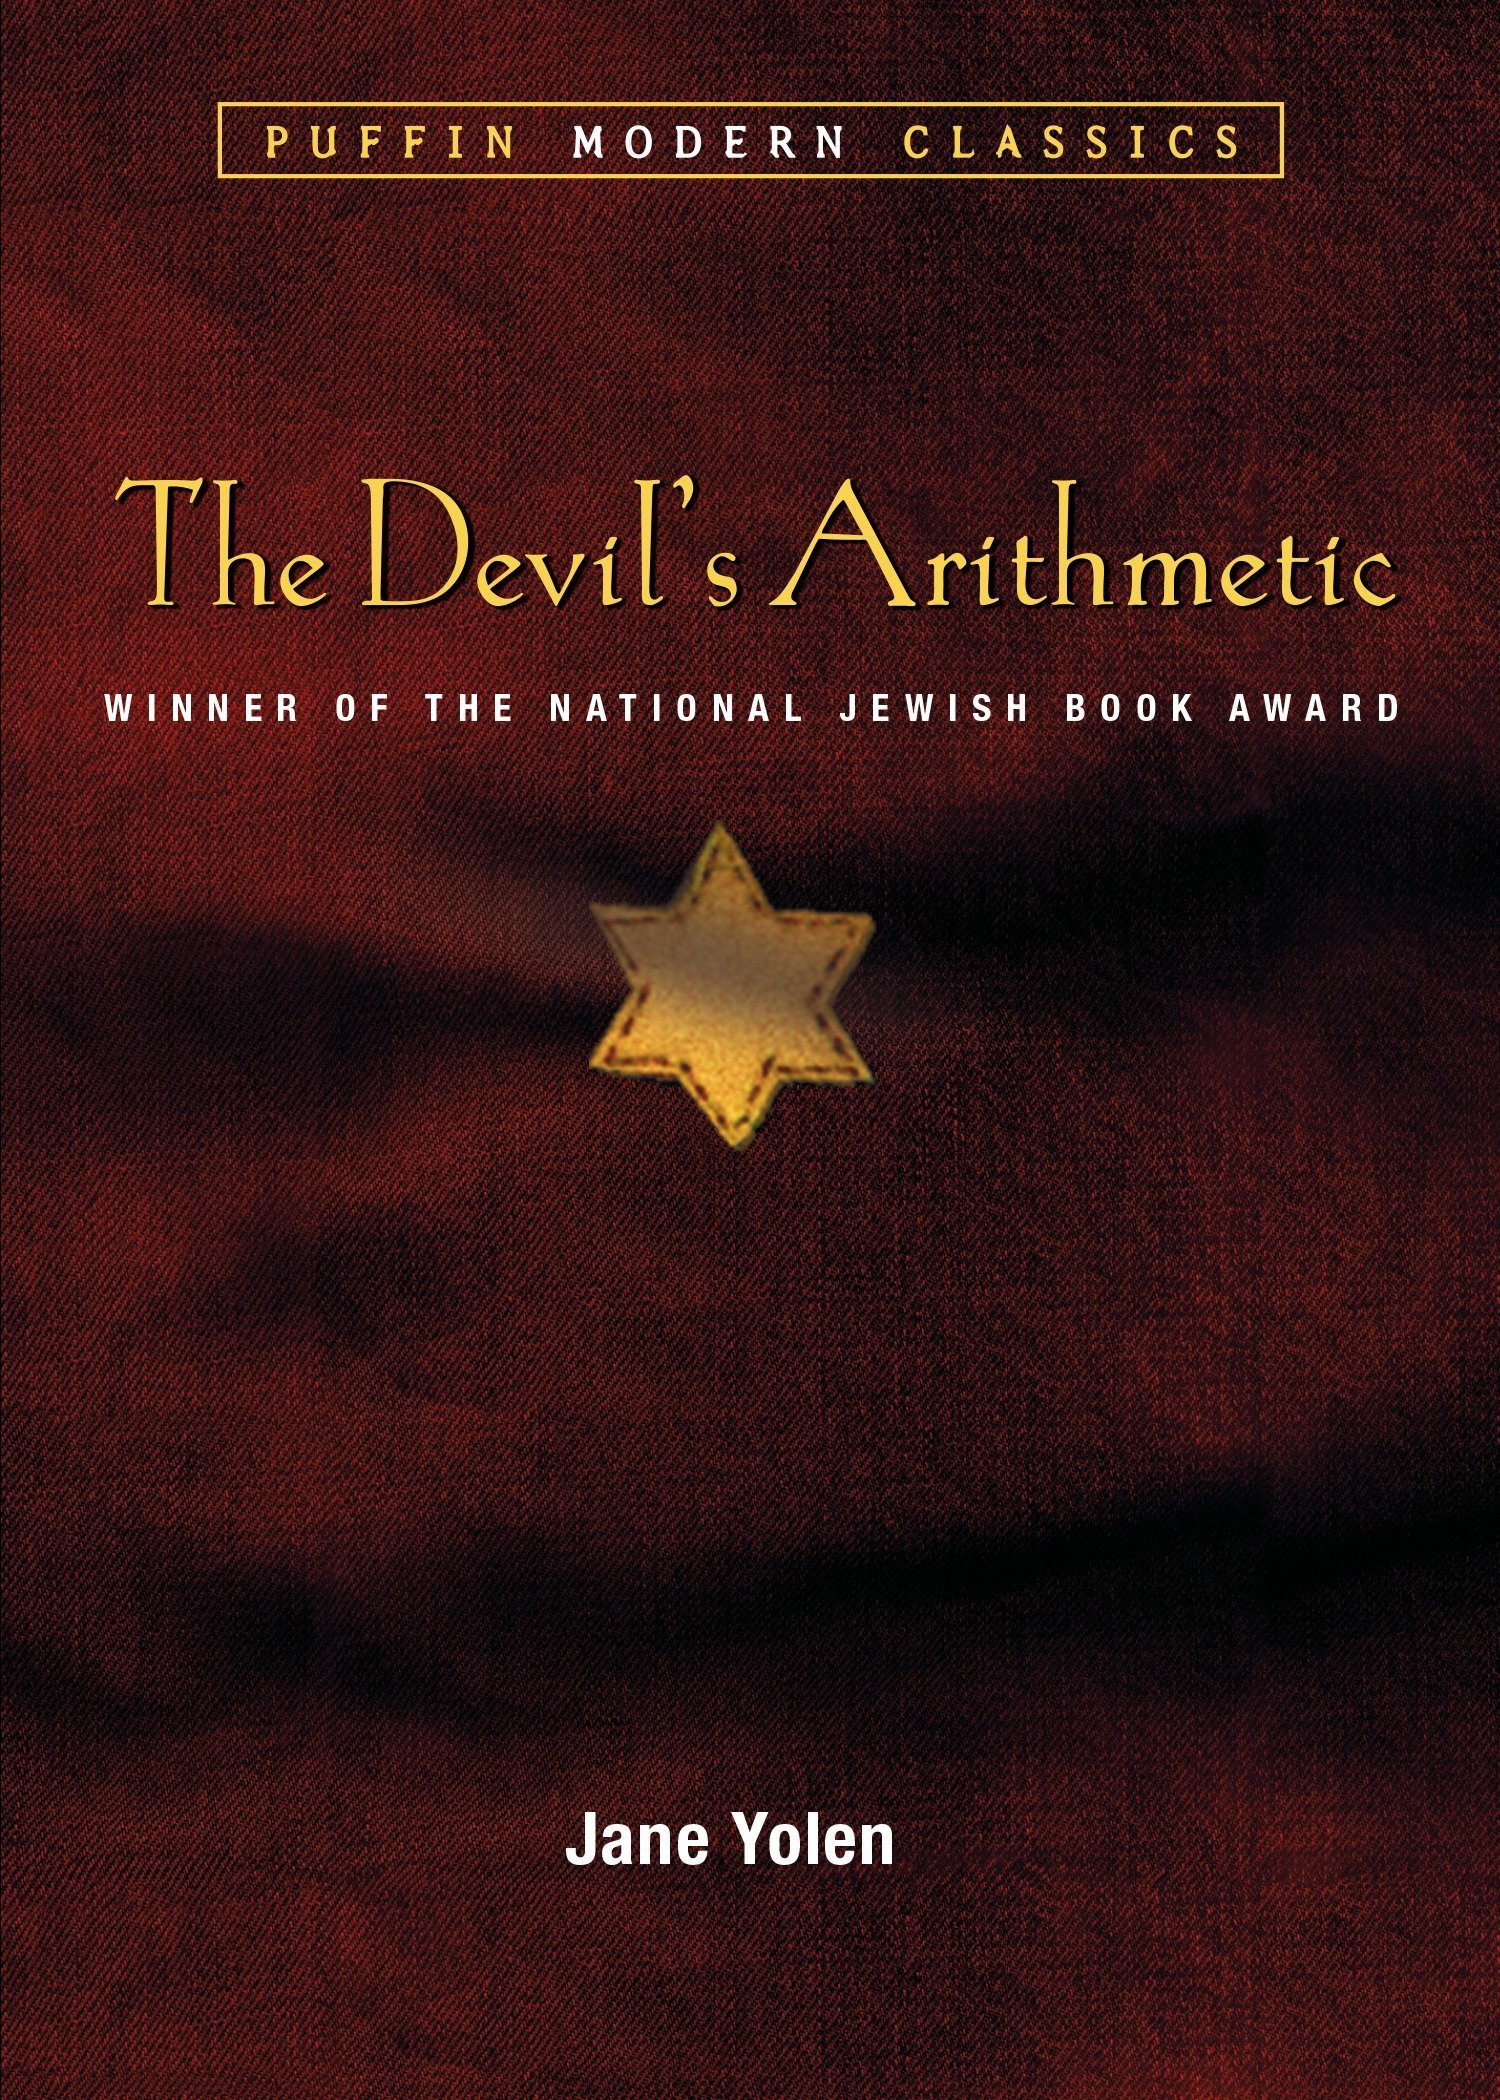 The Devil"s Arithmatic